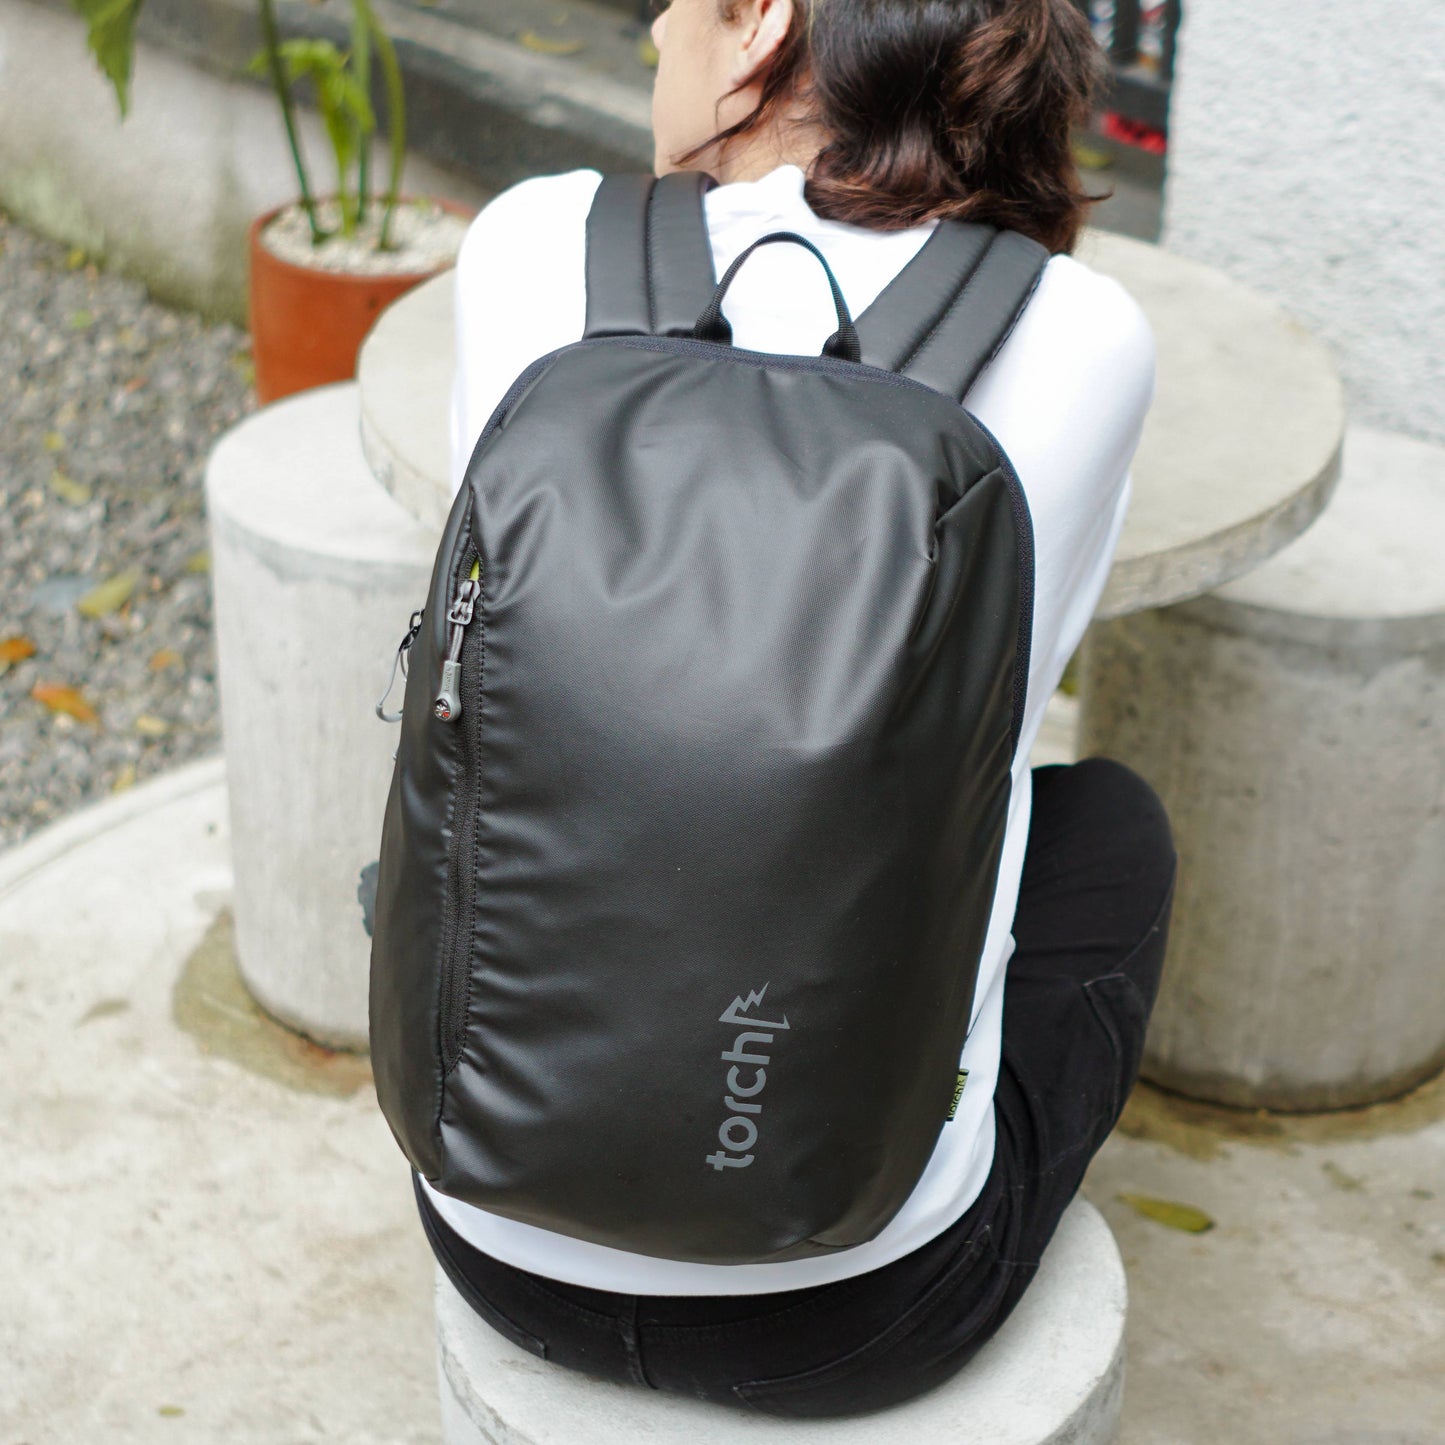 Kazo Backpack 19 Liter - Black